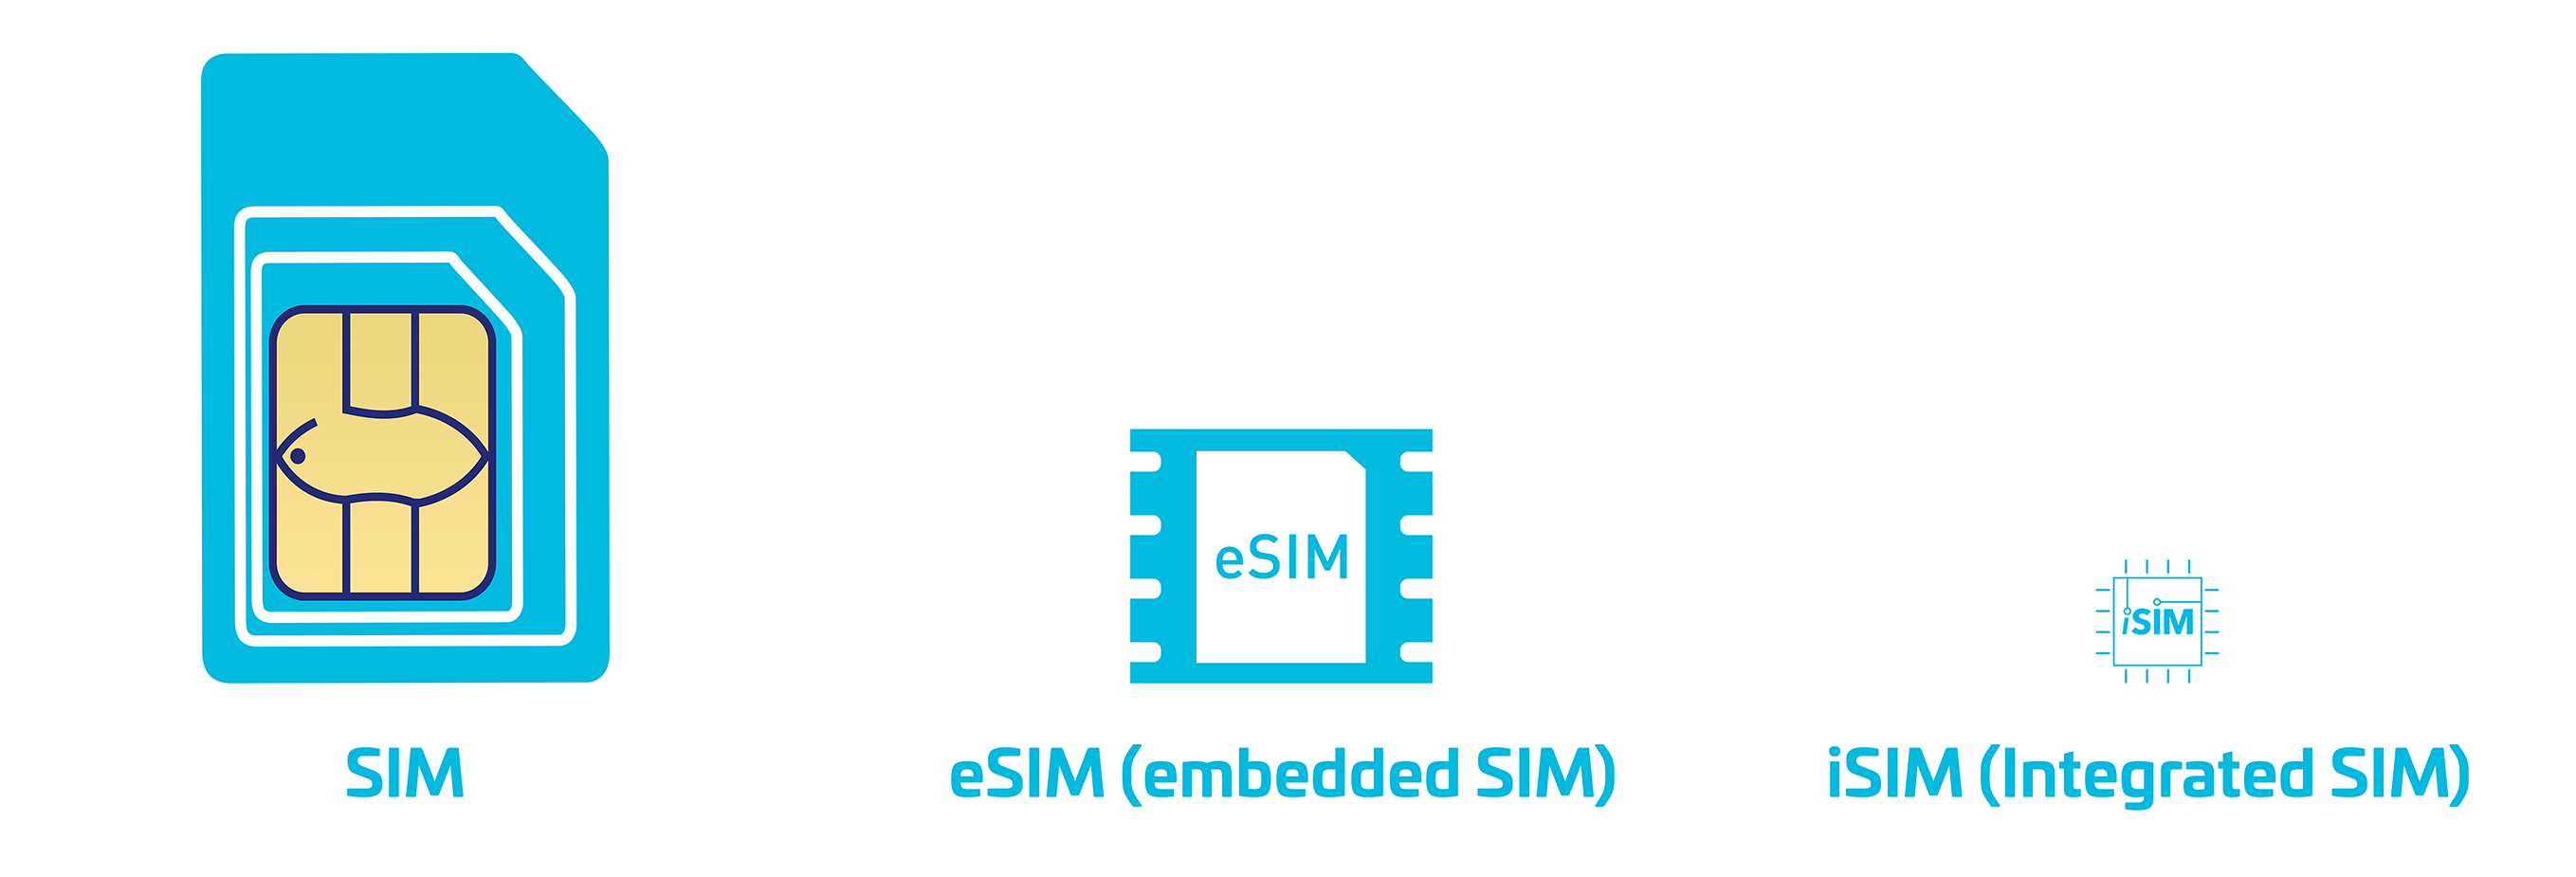 what is eSIM card